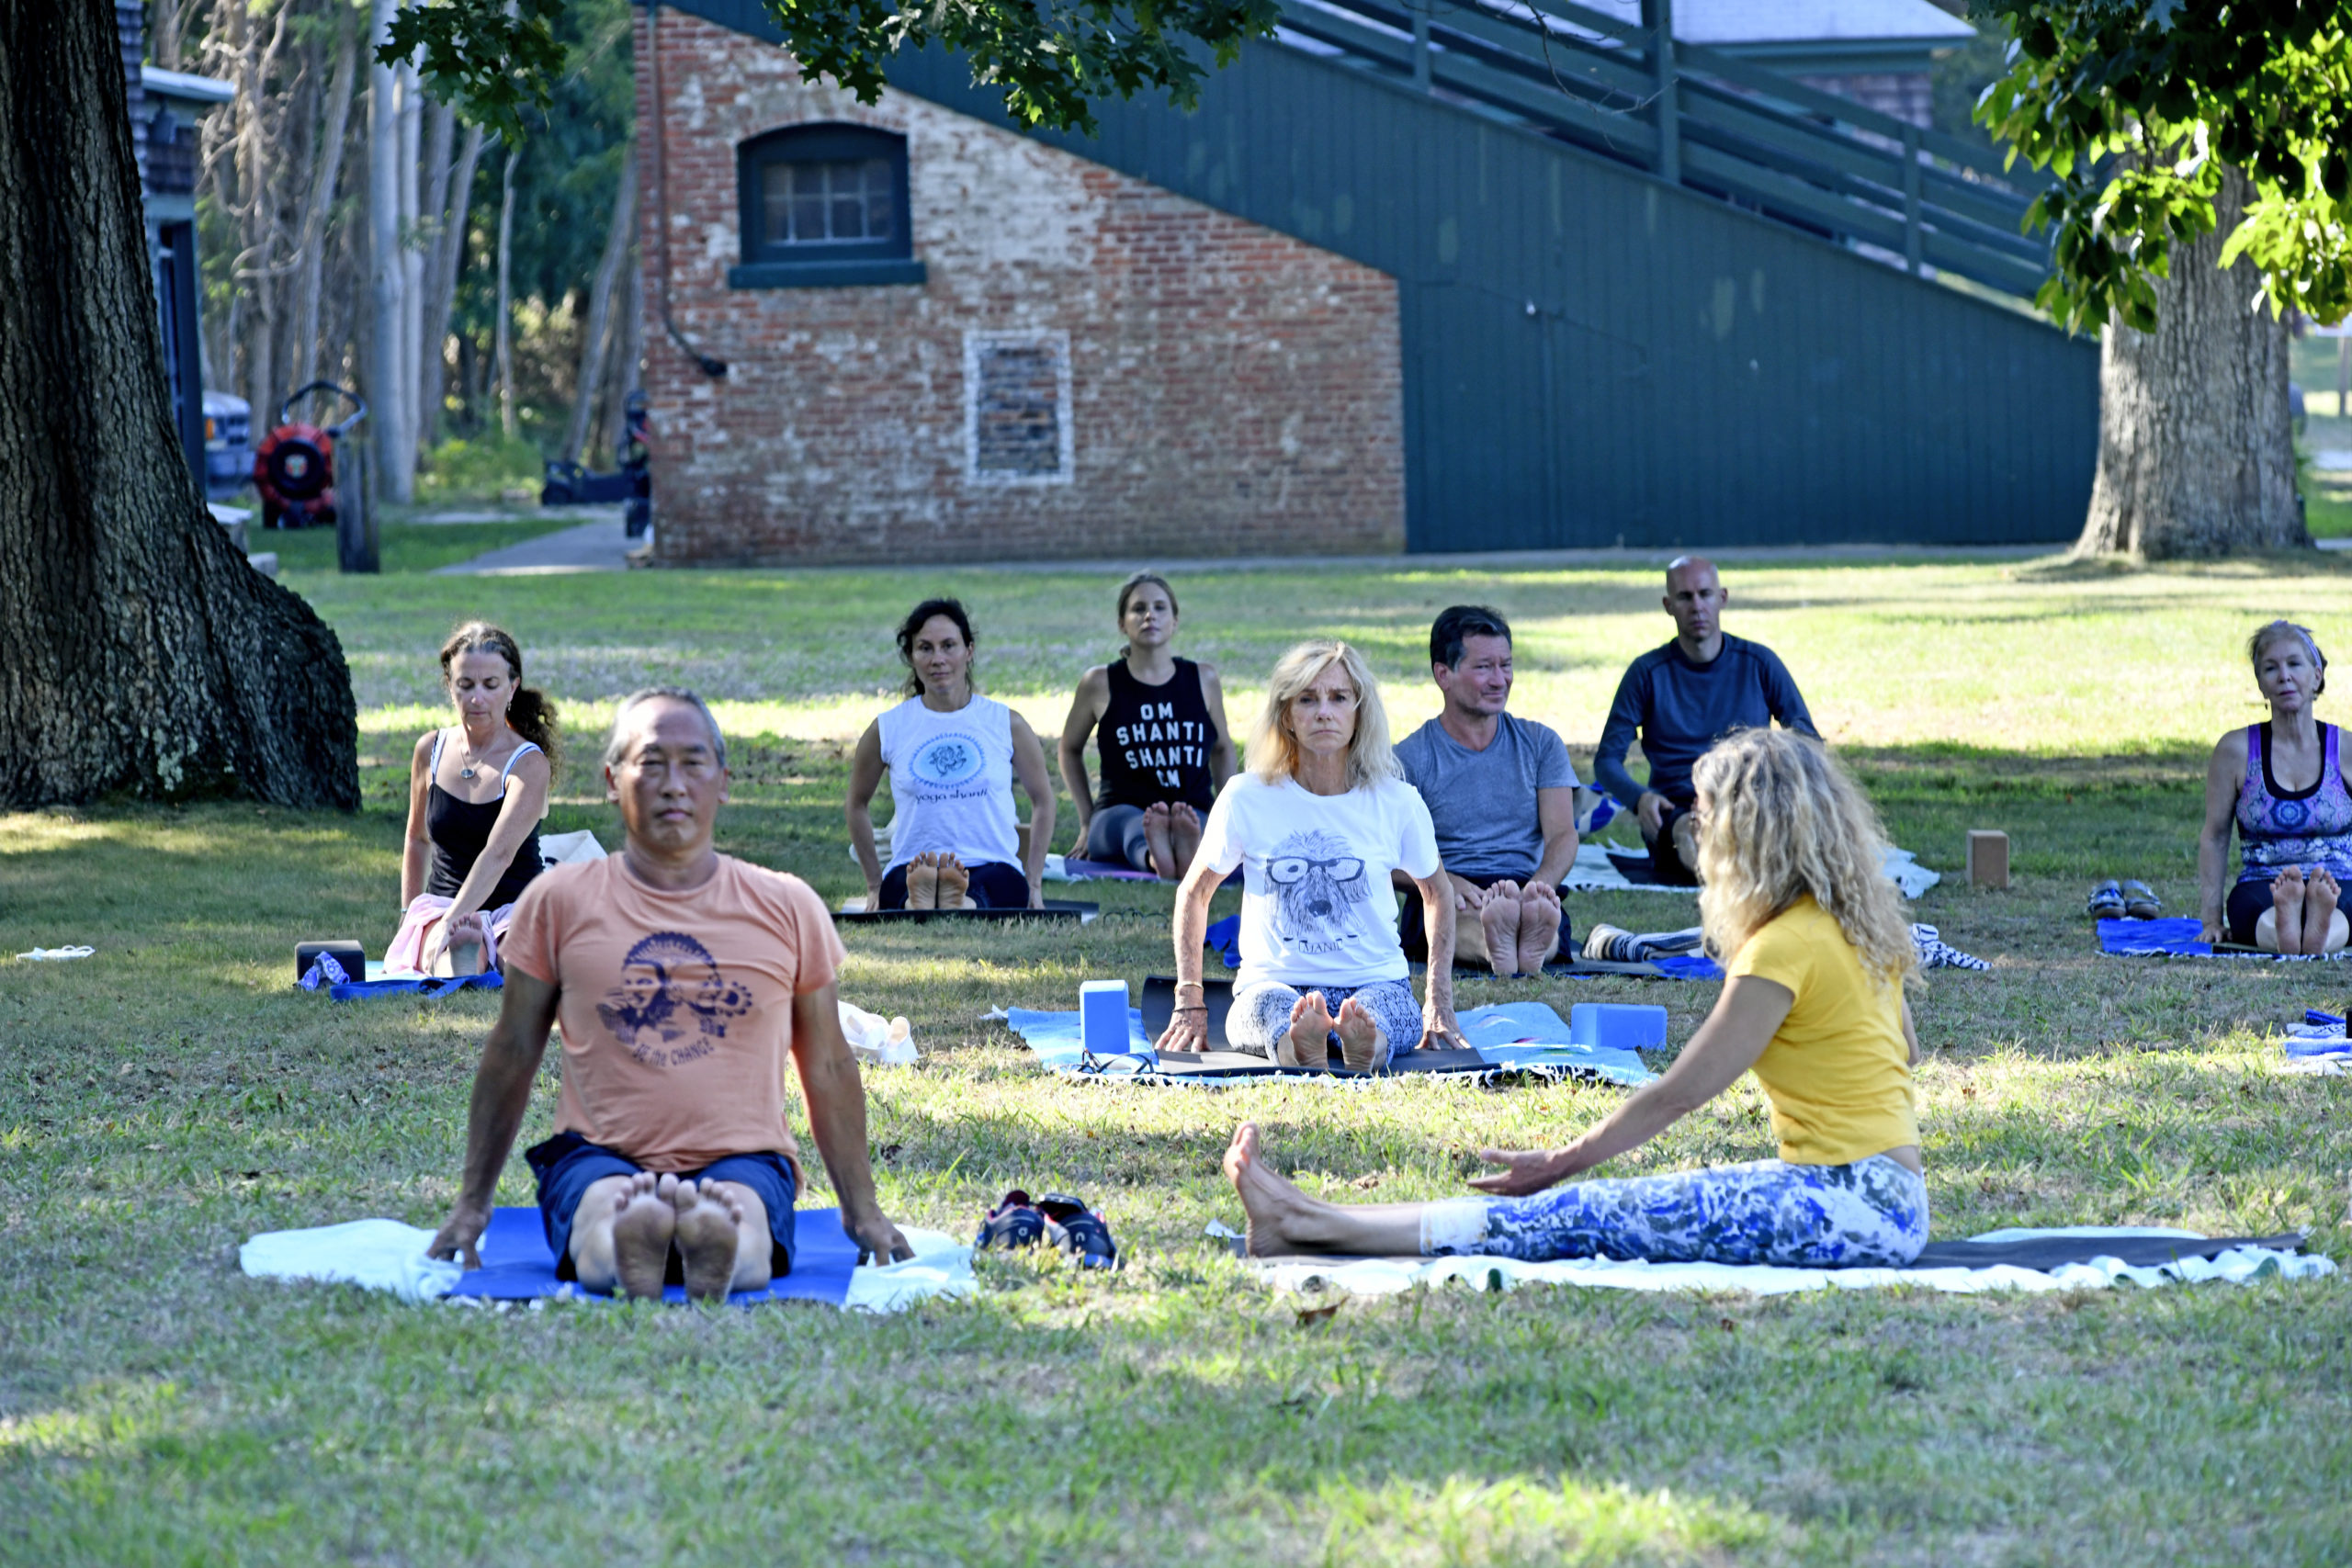 Yoga Shanti, the Sag-Harbor-based yoga studio, is holding daily outdoor yoga classes from 9 to 10 a.m., rain or shine, in Mashashimuet Park.     DANA SHAW